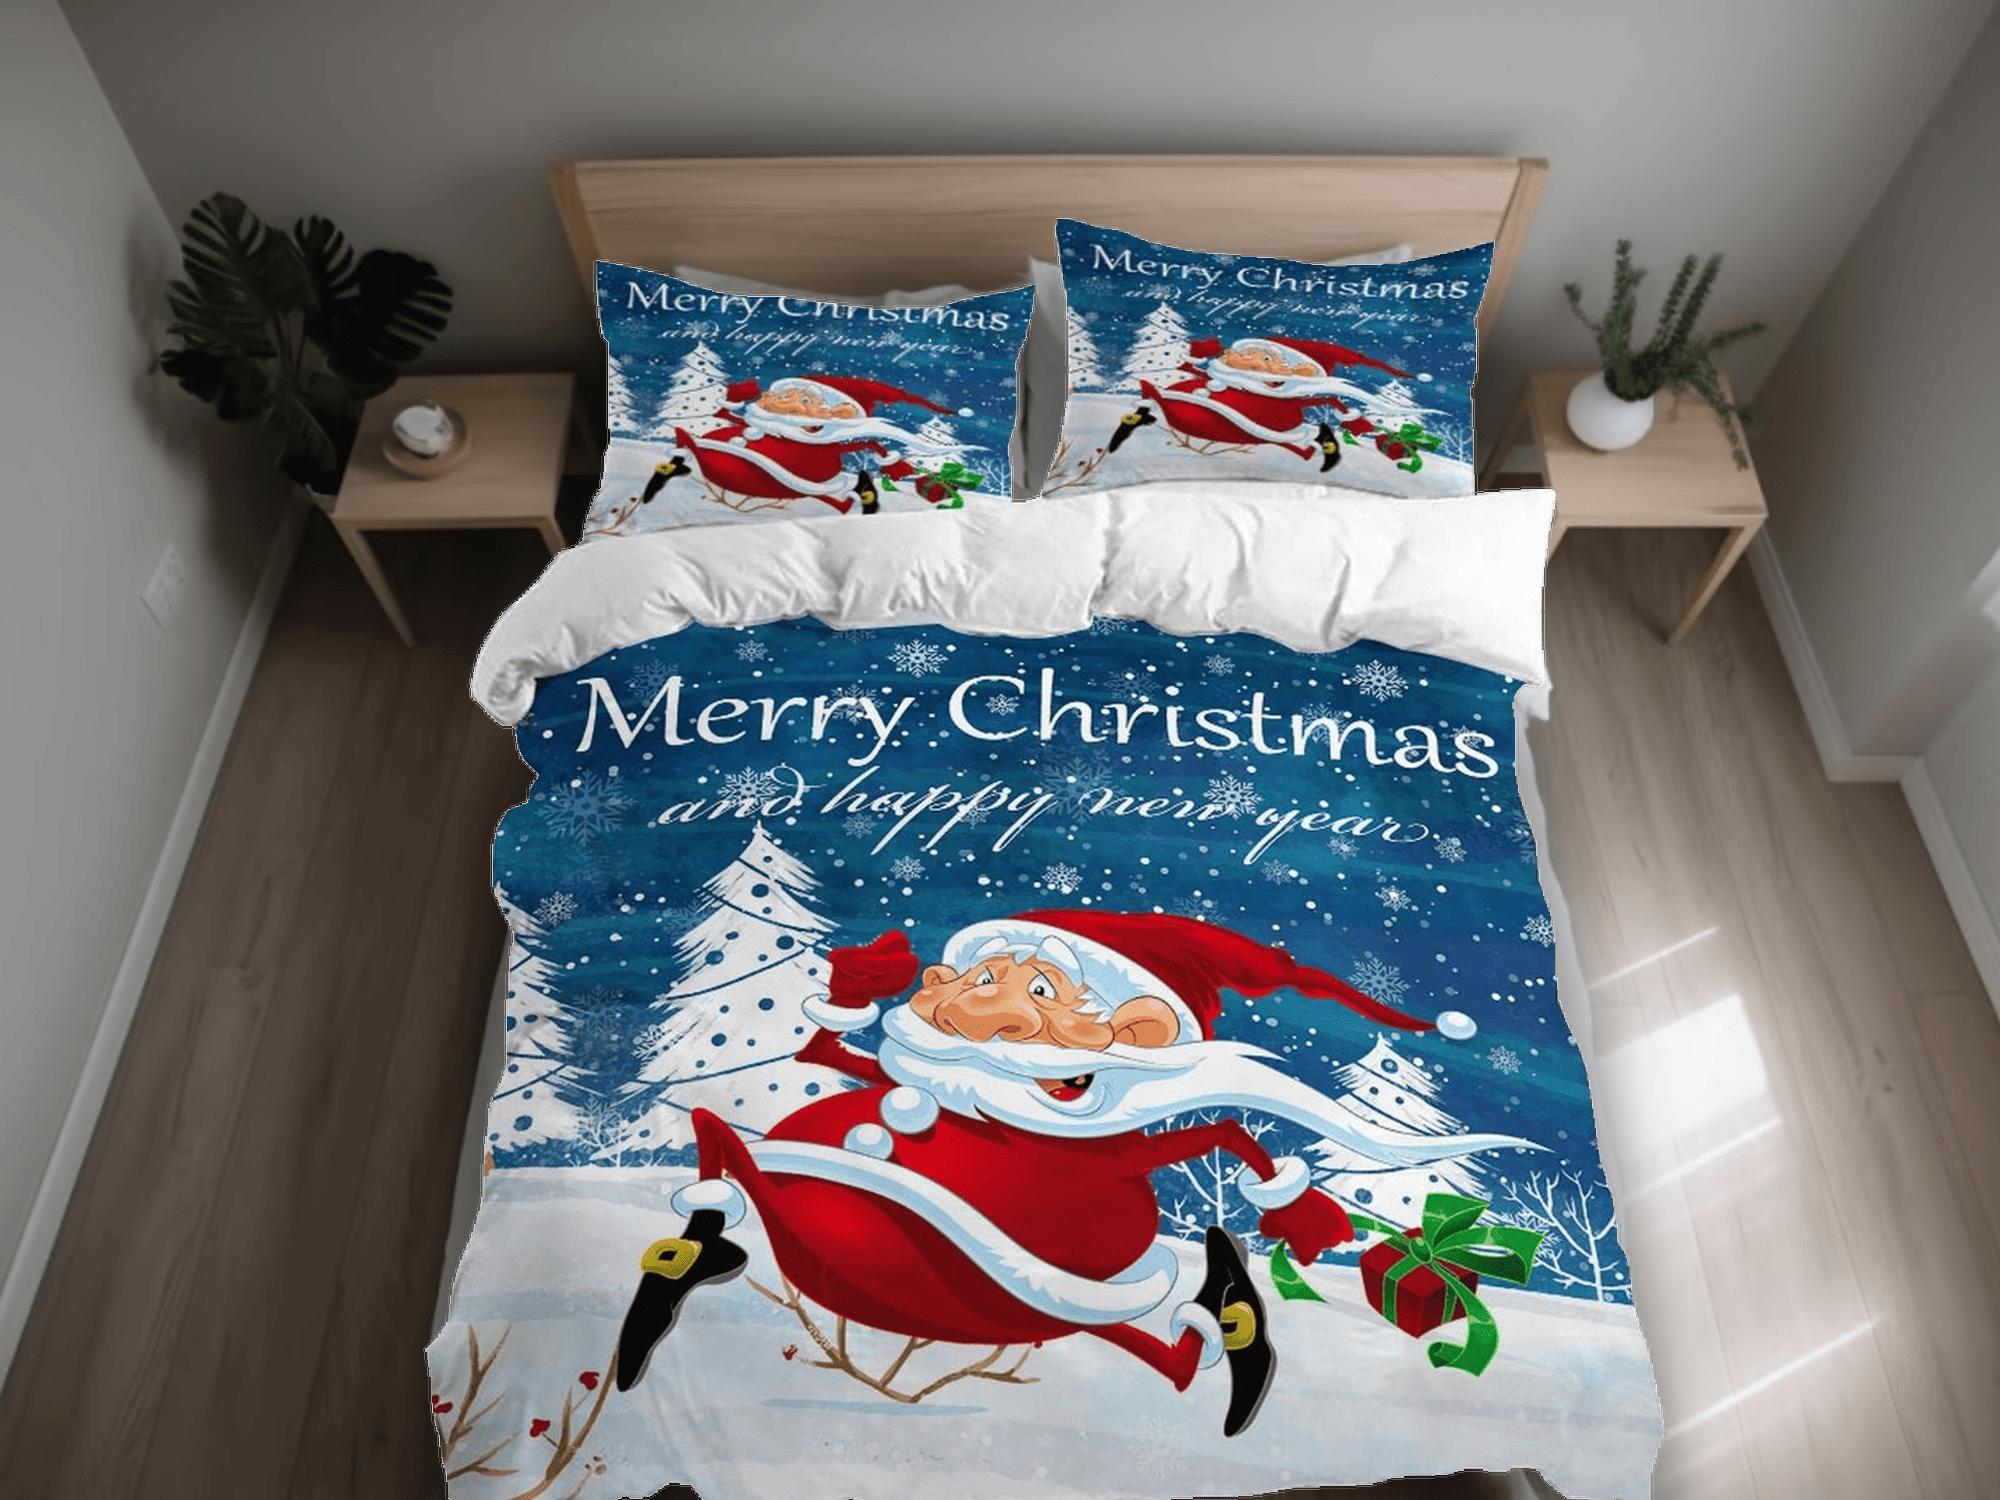 daintyduvet Santa Claus white Christmas bedding, pillowcase holiday gift duvet cover king queen full twin toddler bedding baby Christmas farmhouse decor